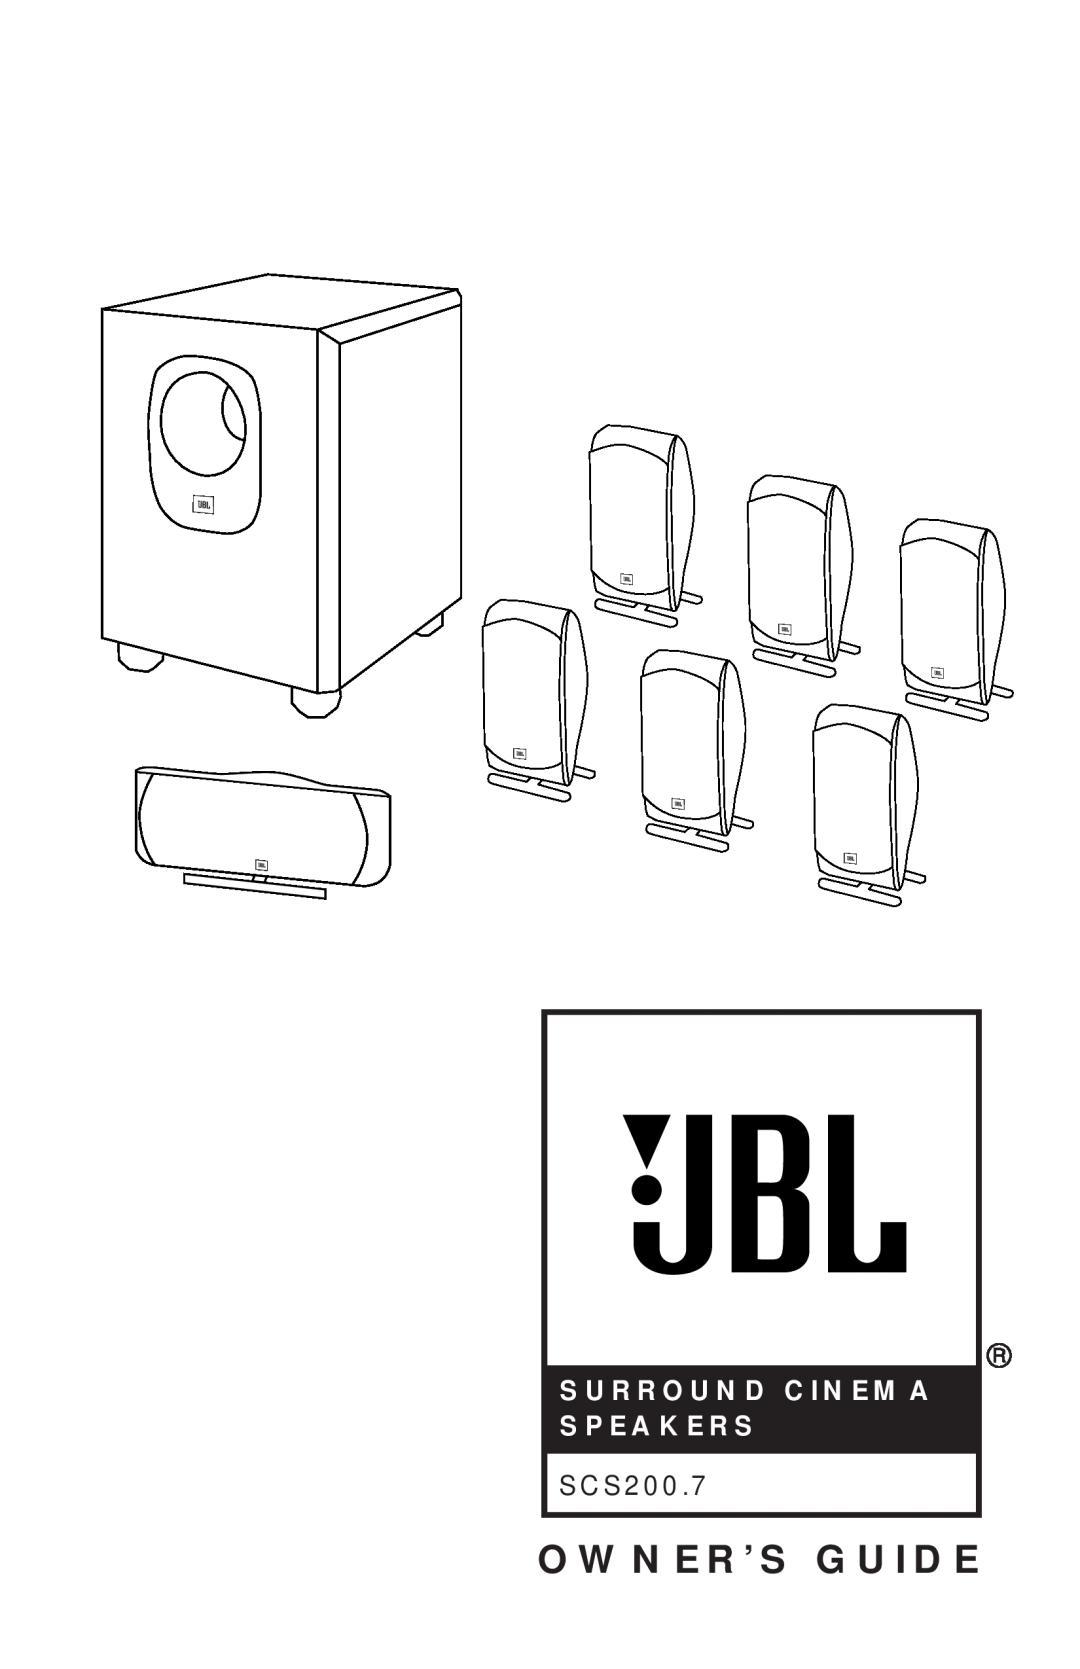 JBL SCS200.7 manual Owner’S Guide, Surround Cinema Speakers 